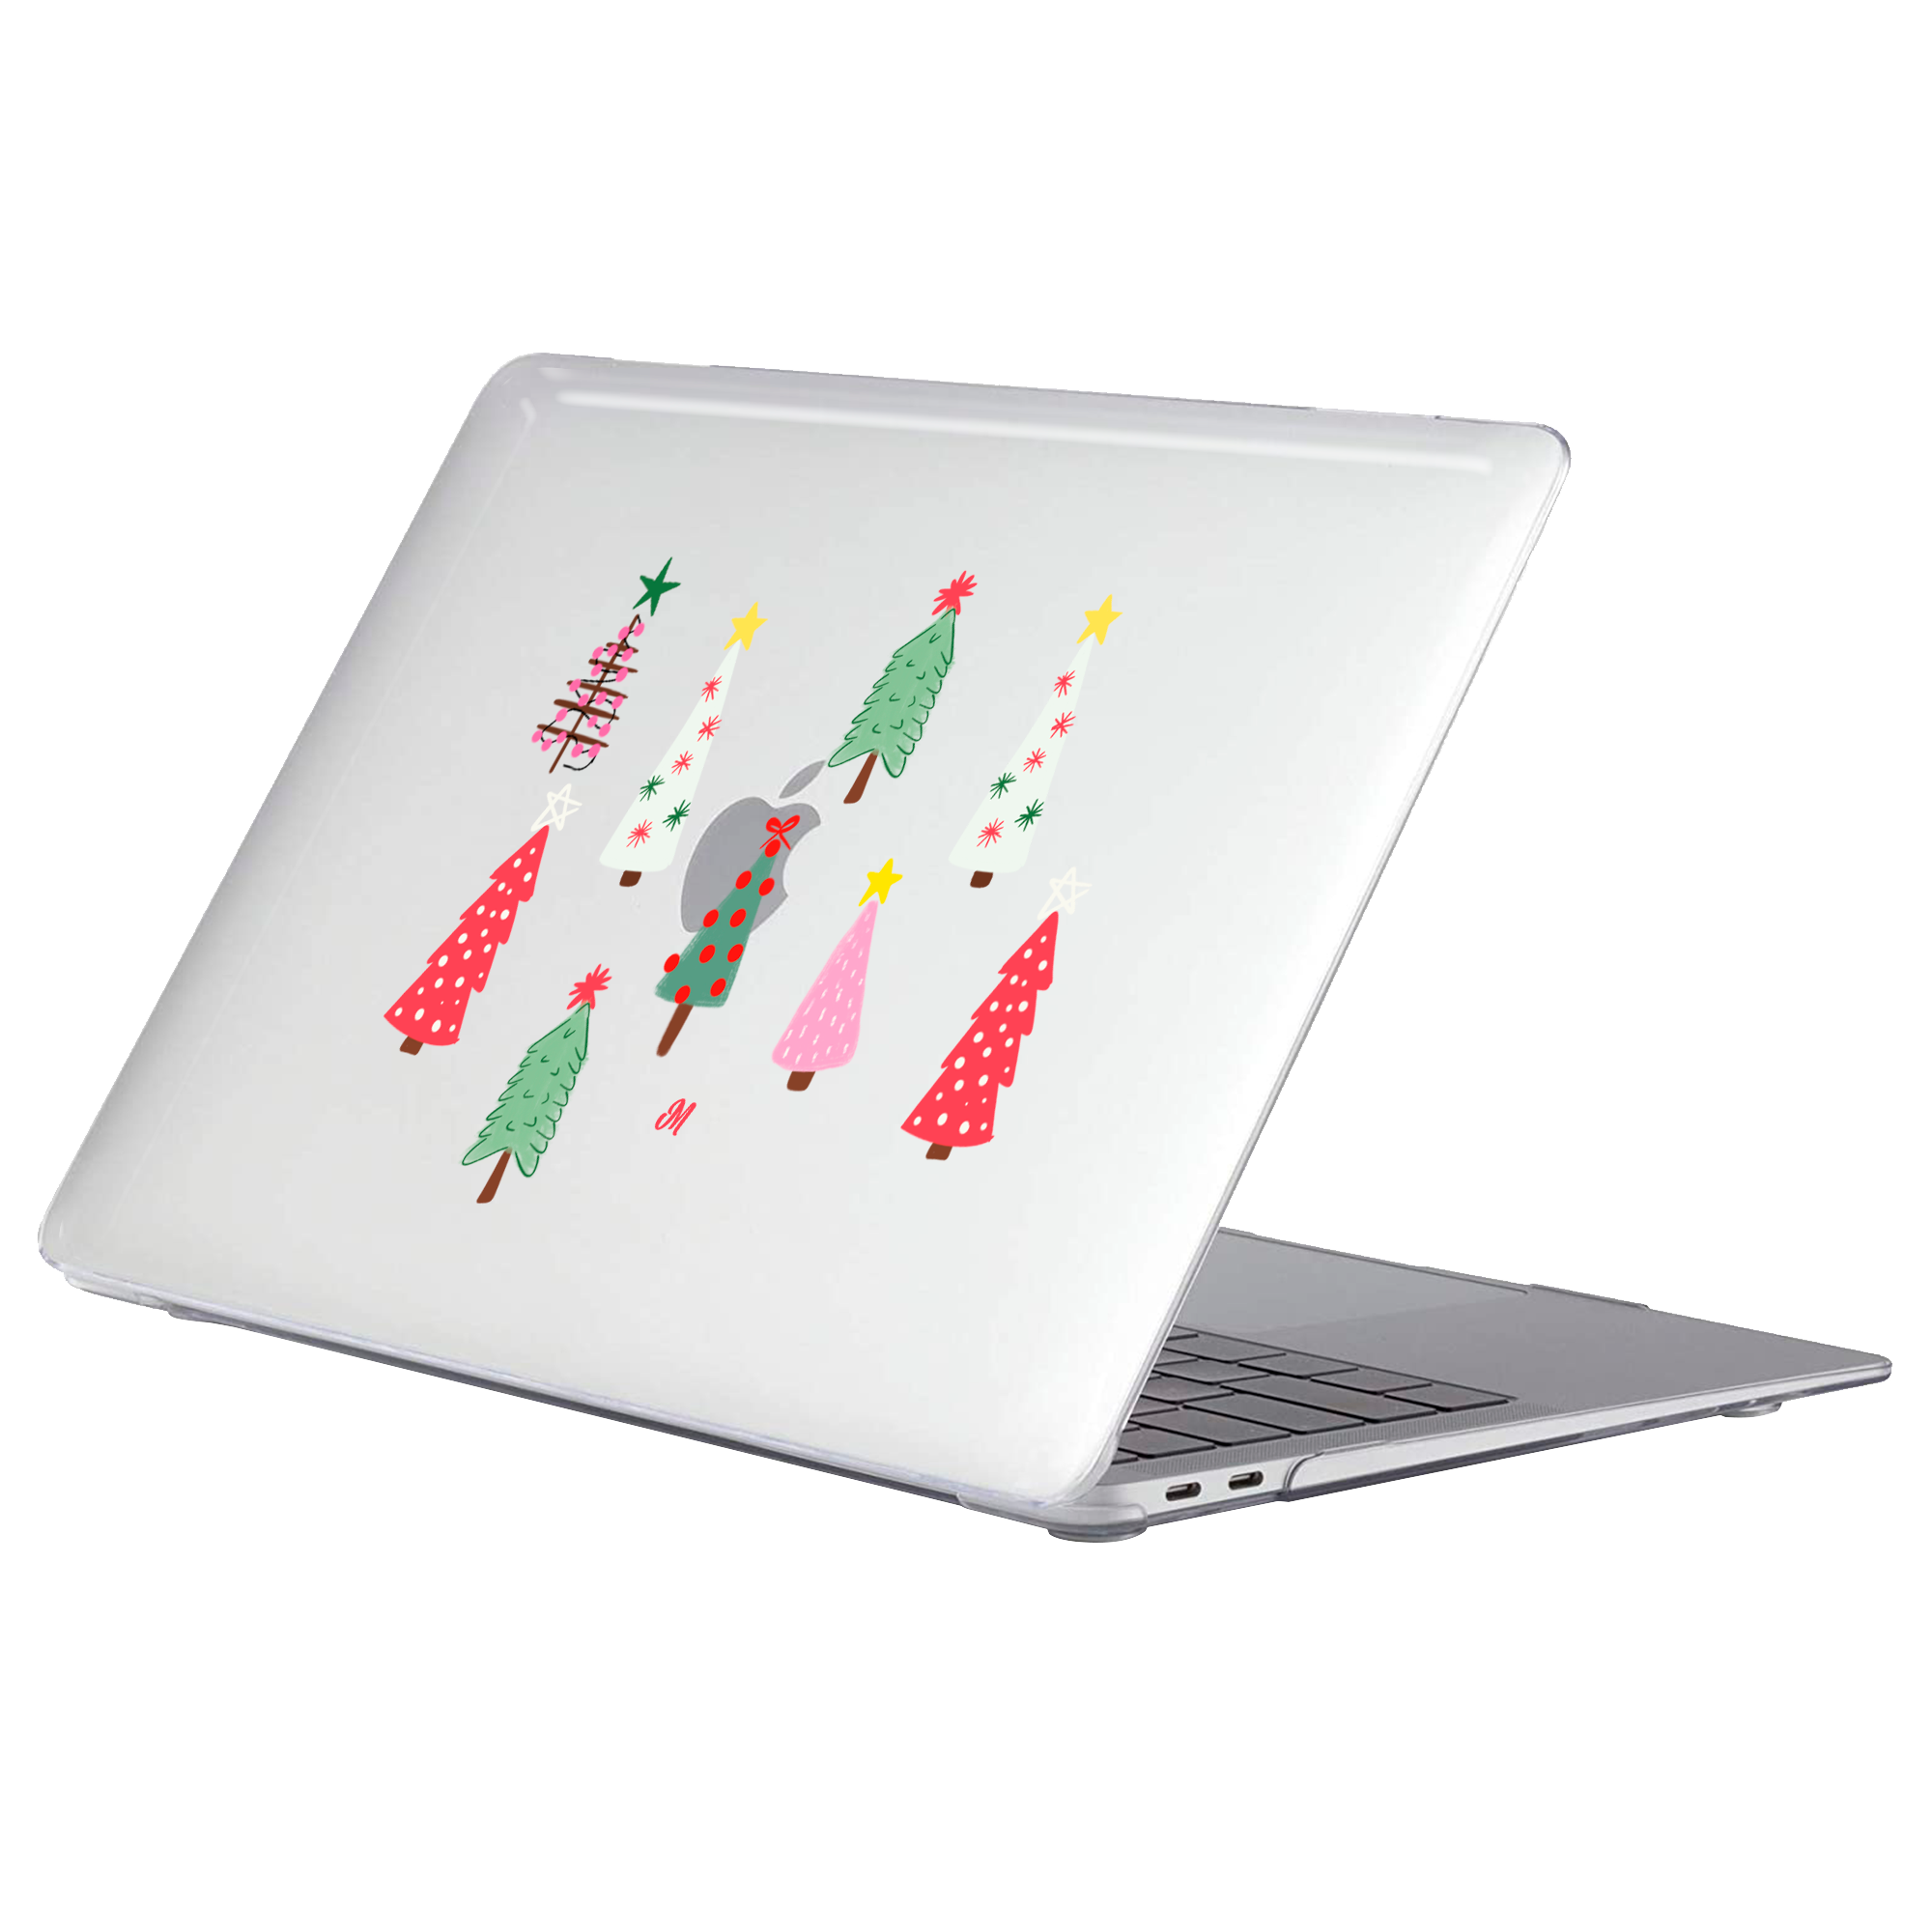 Arboles de navidad MacBook Case - Mandala Cases